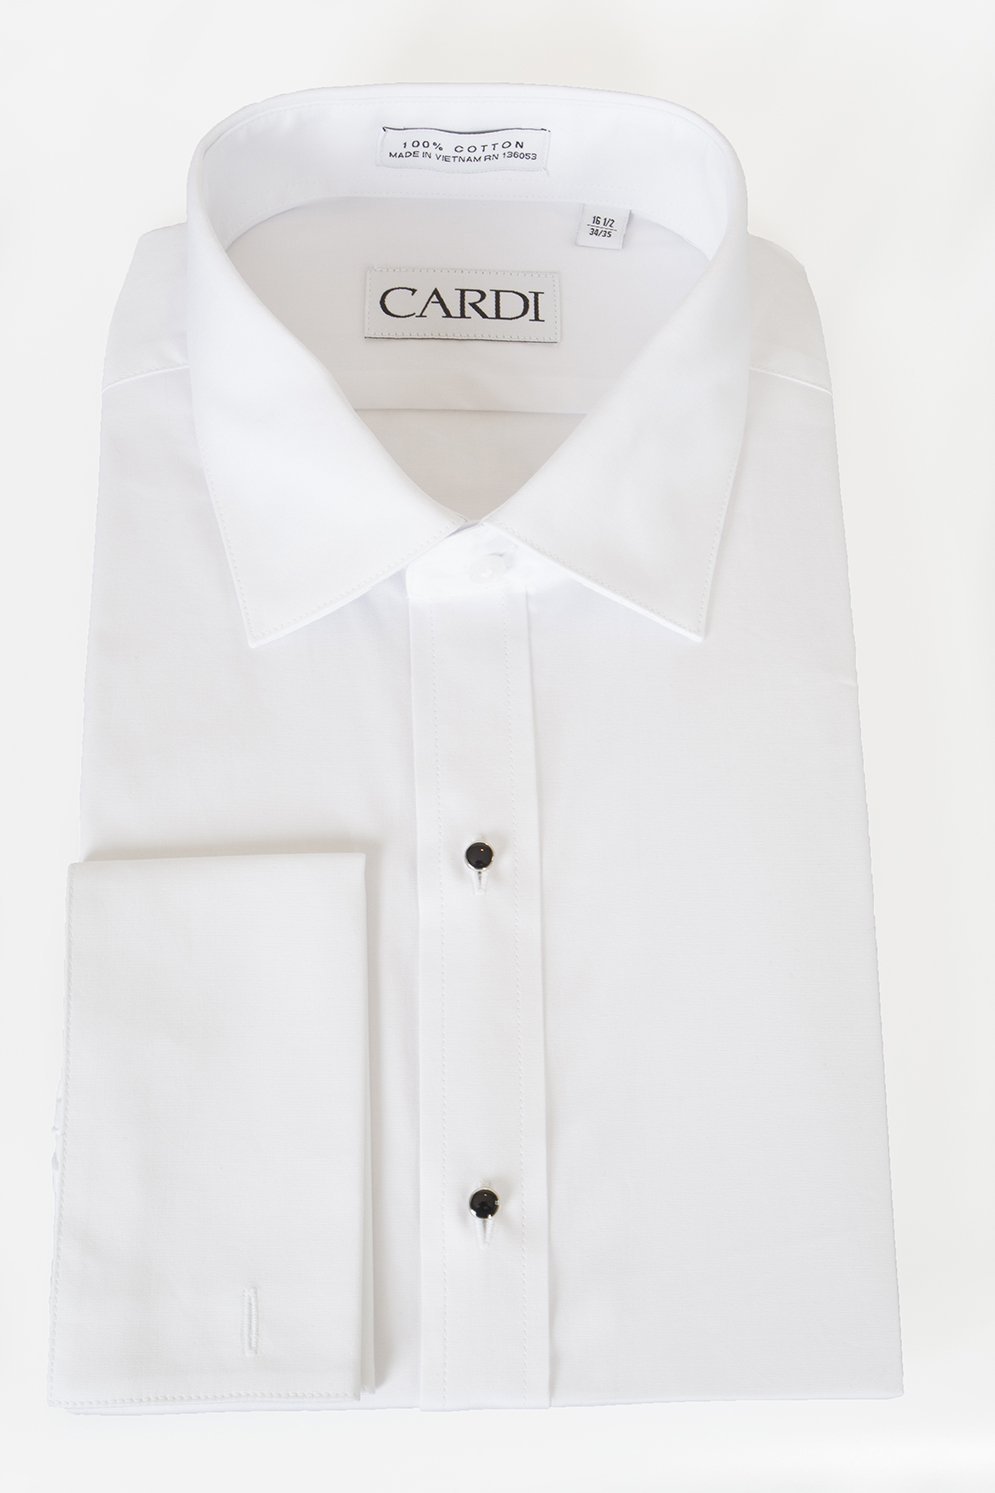 White tuxedo shirt. Flex fit spread collar. Stitch break resistant buttons. French cuffs